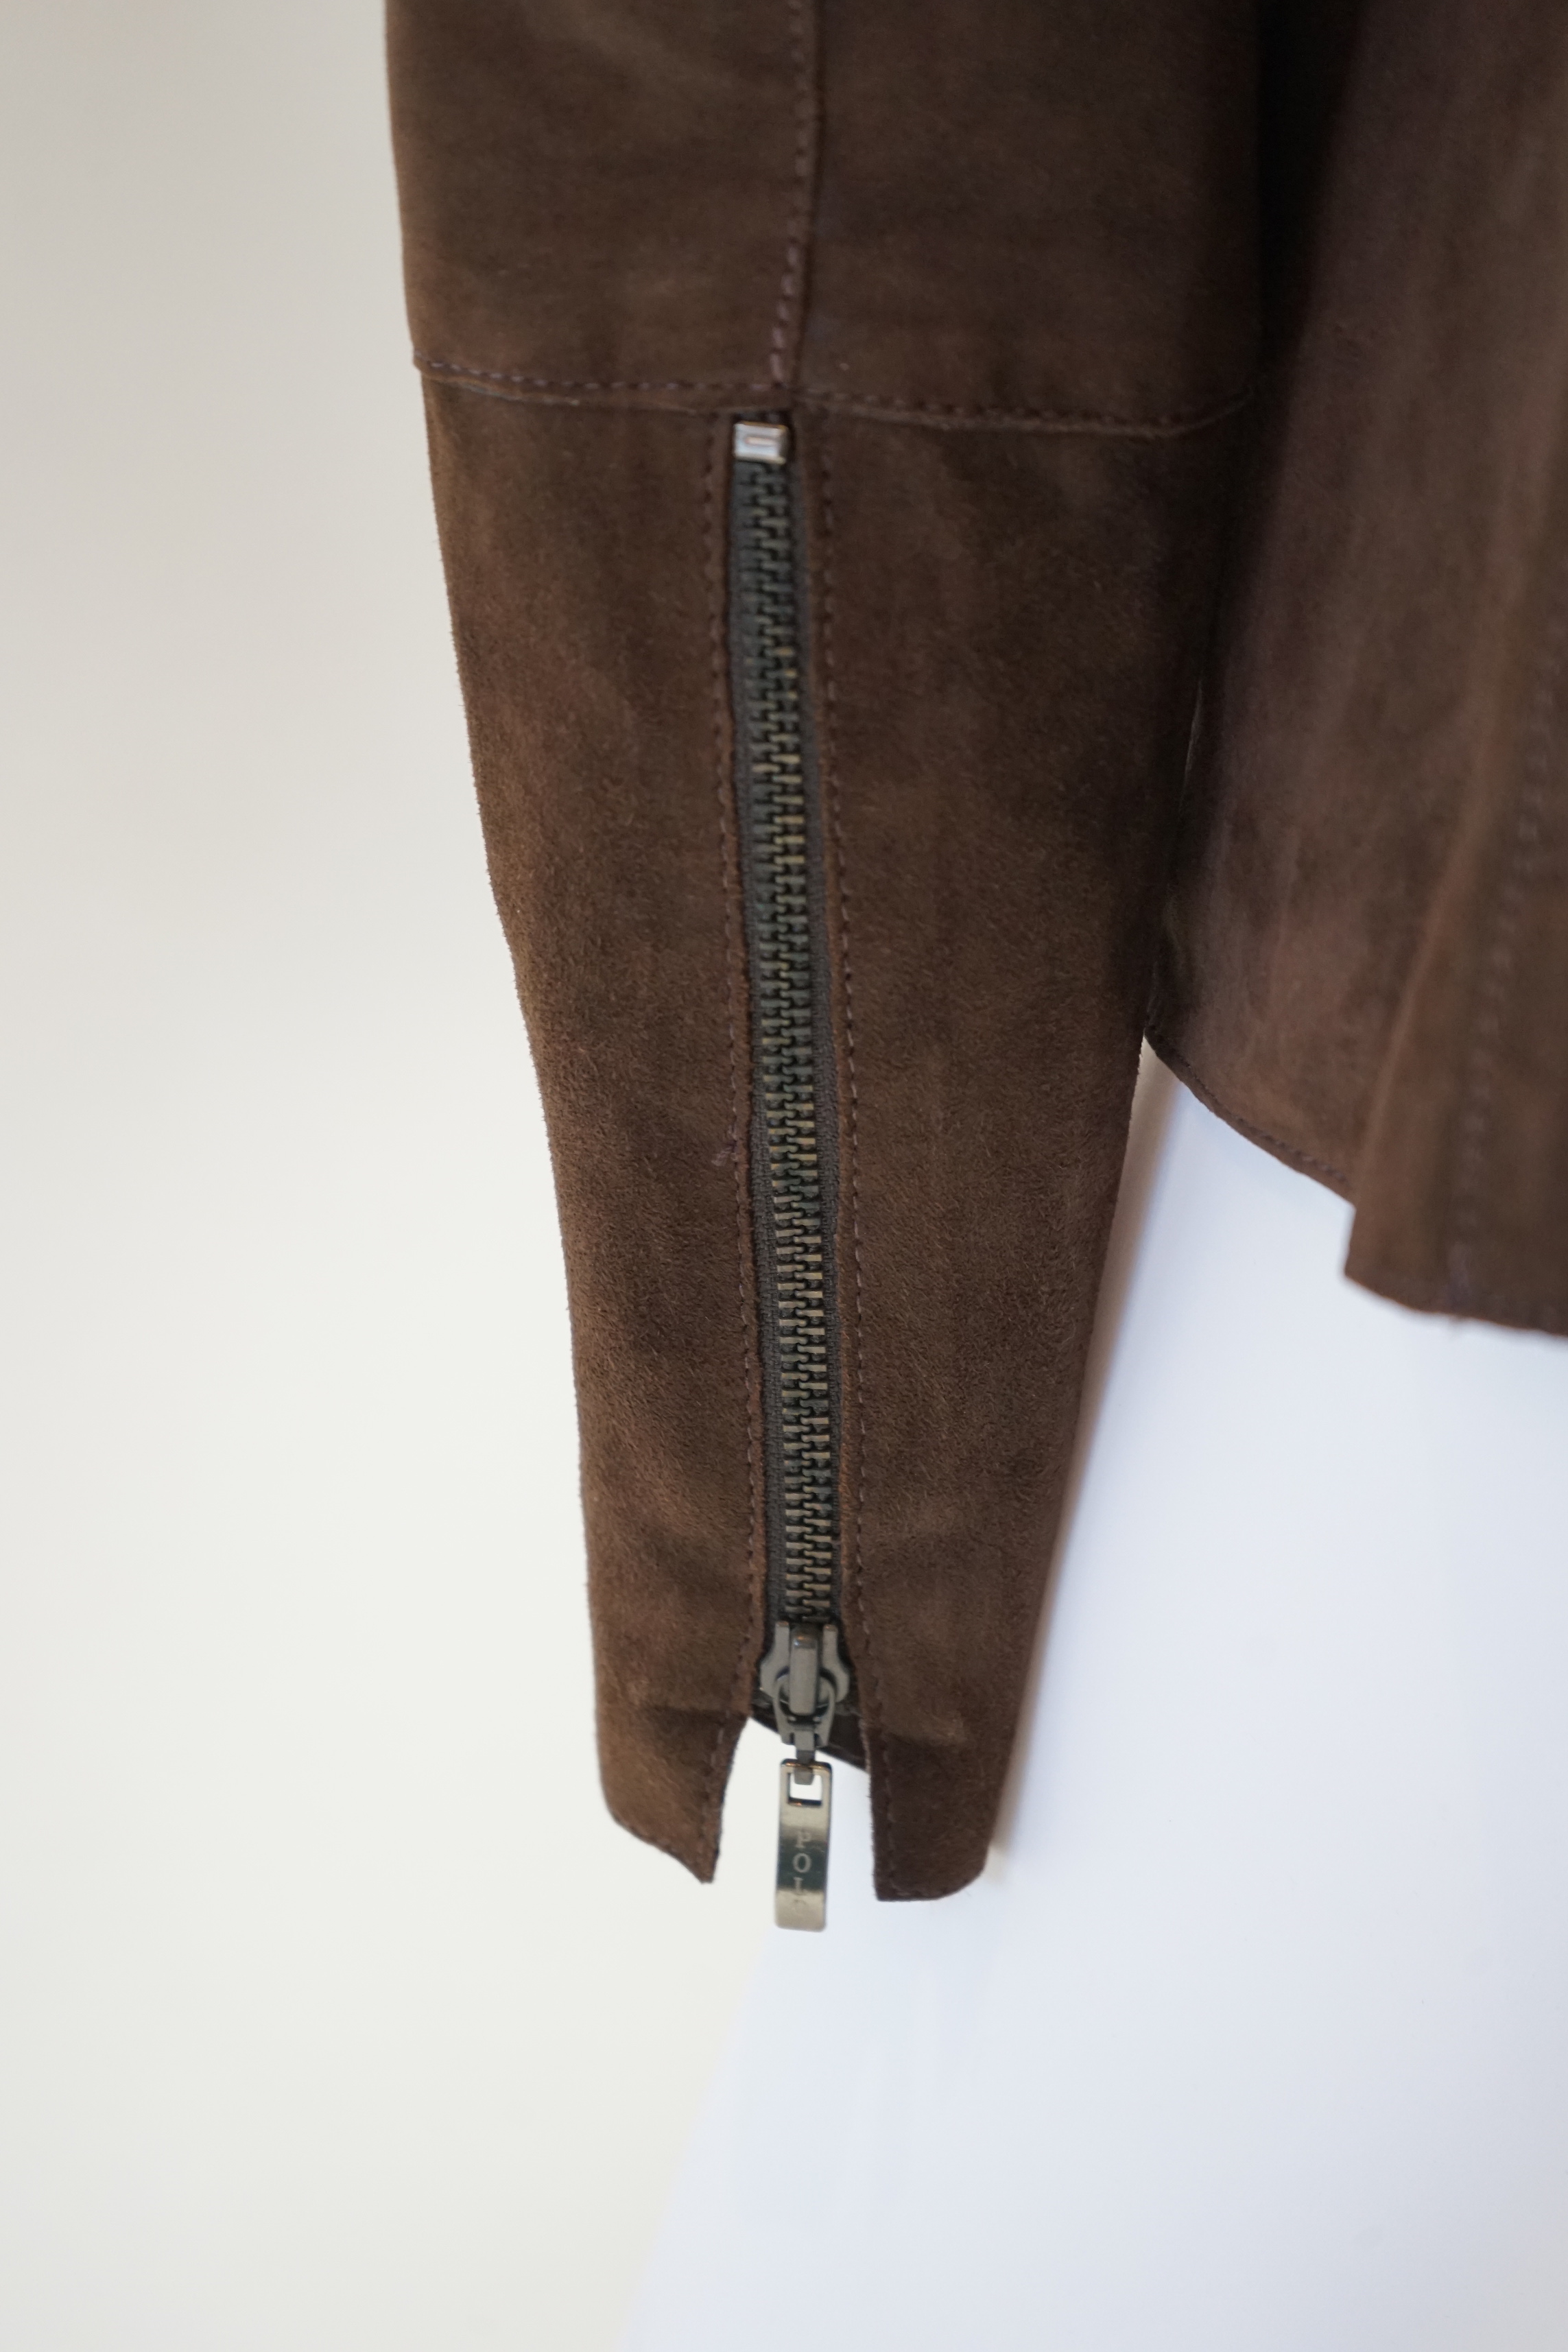 A Ralph Lauren, Polo Collection brown suede jacket, size EU 38